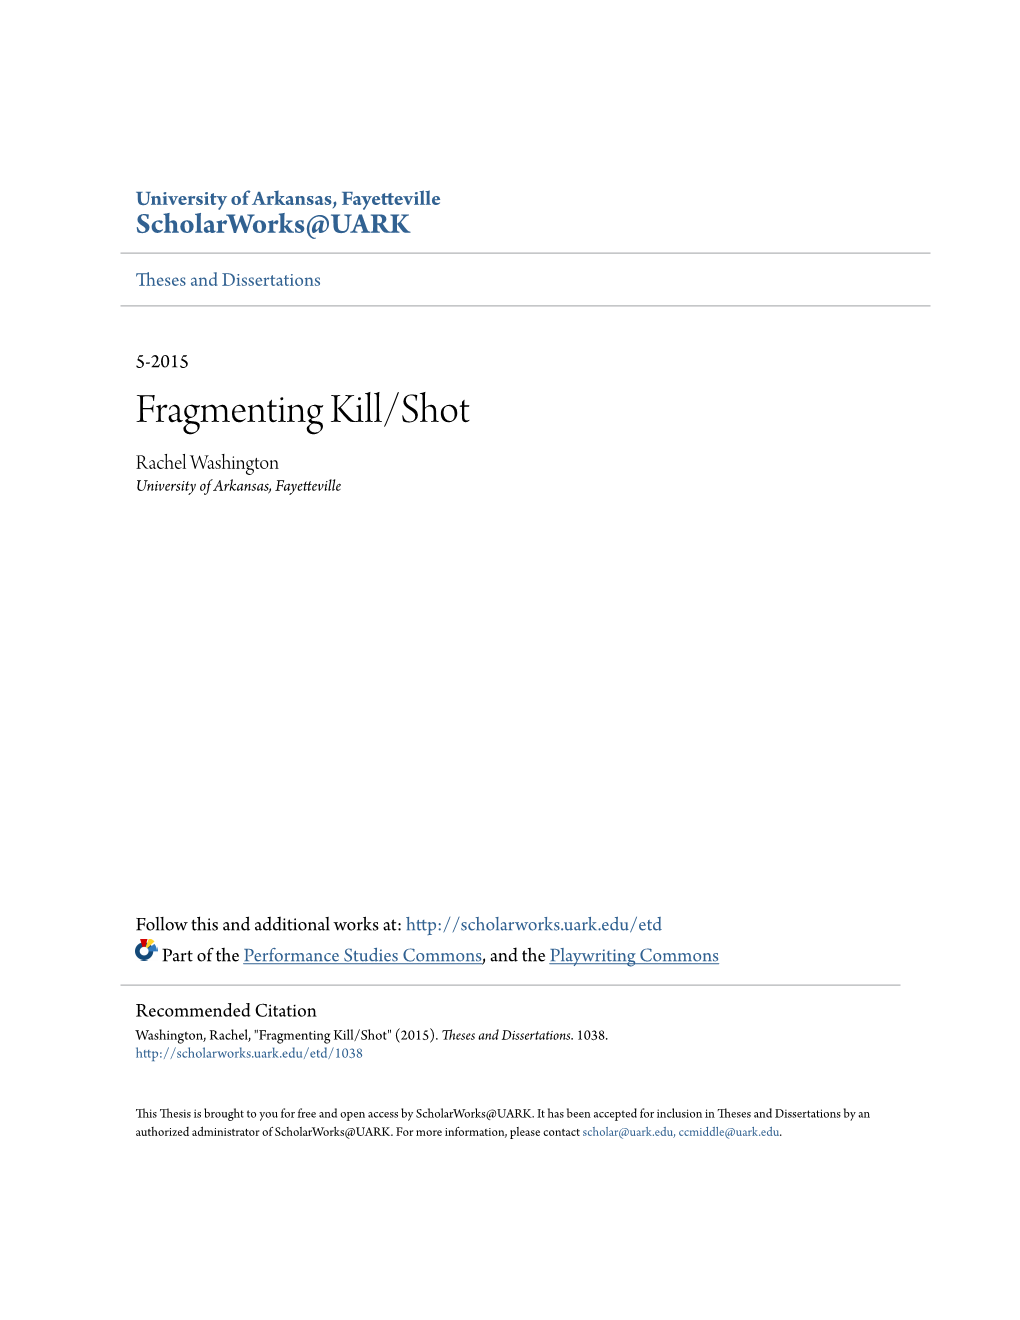 Fragmenting Kill/Shot Rachel Washington University of Arkansas, Fayetteville